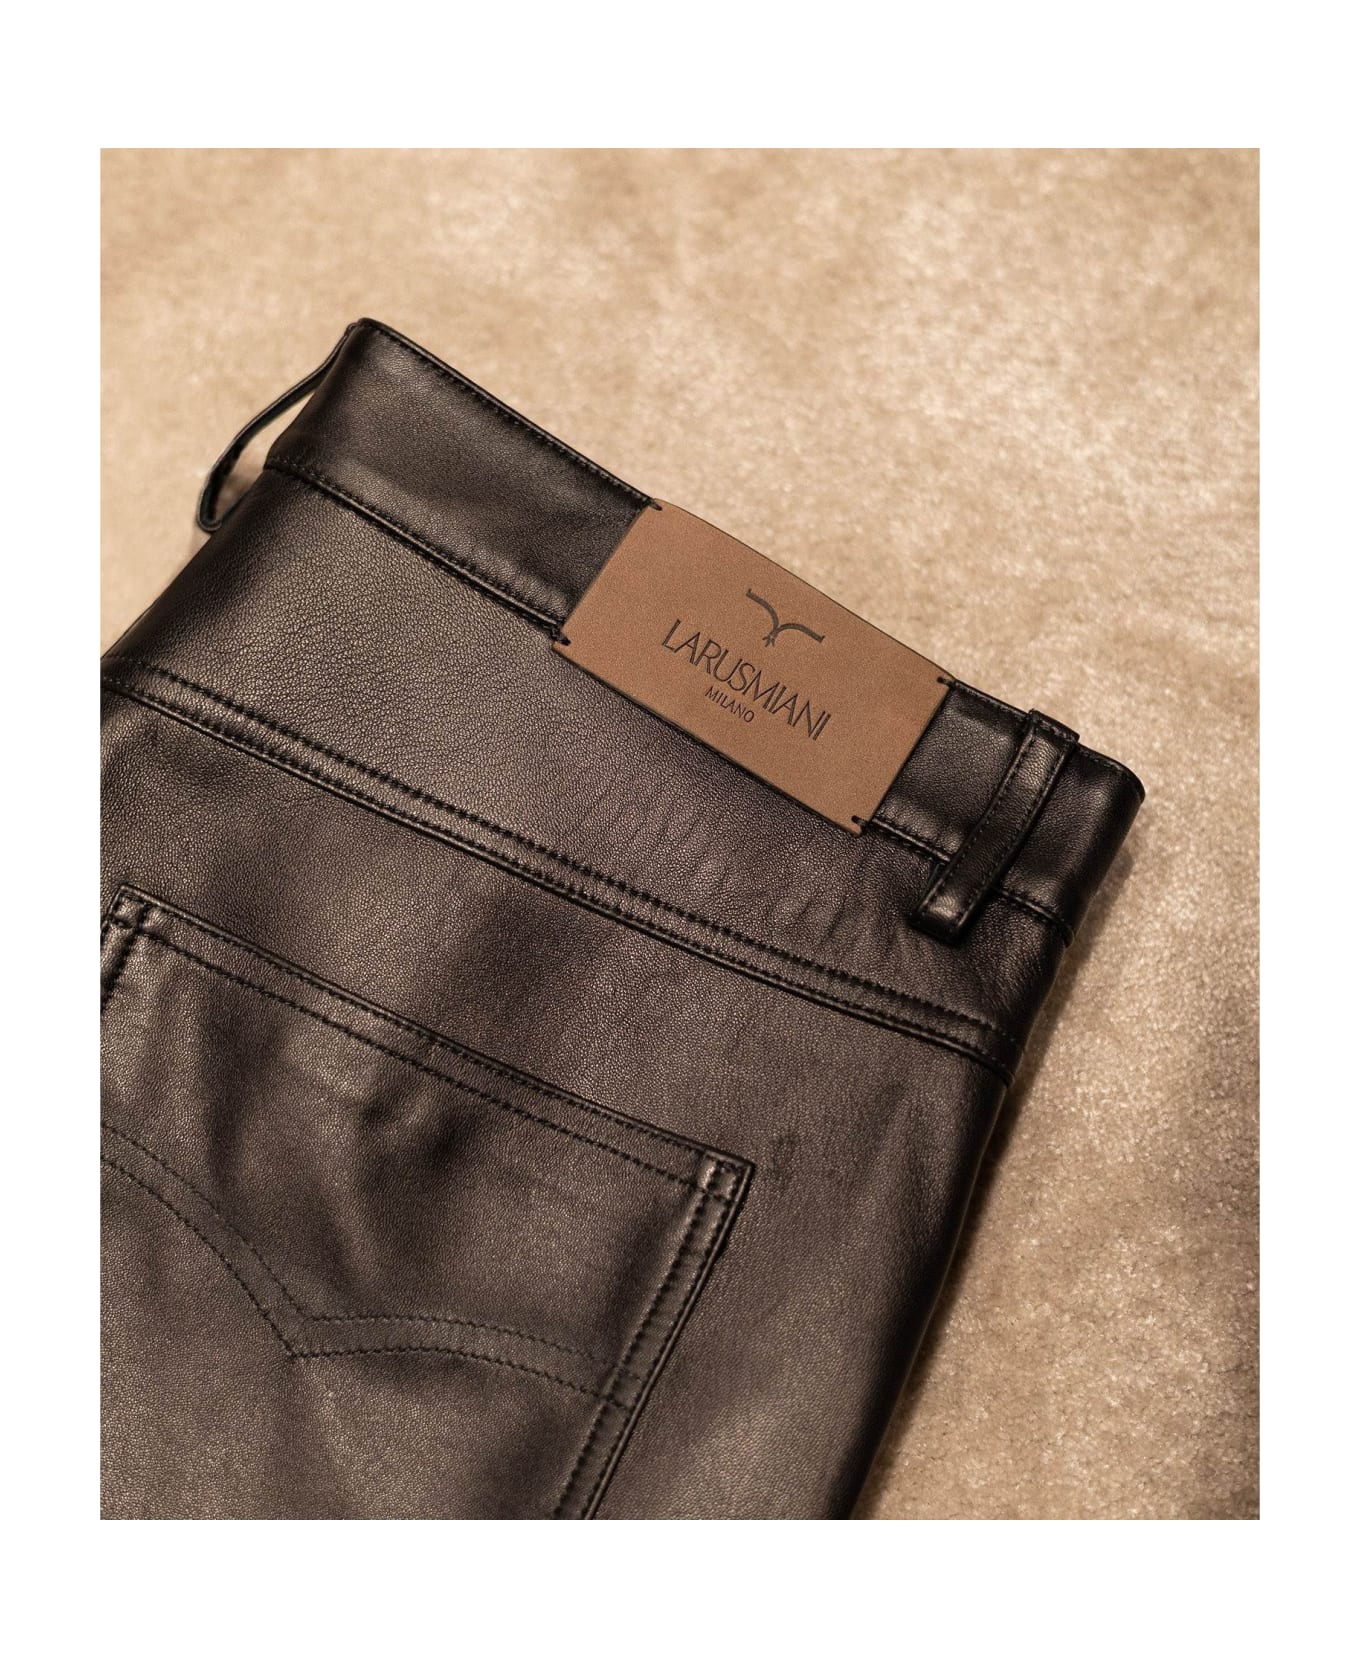 Larusmiani Leather Trouser Racer Pants - Black